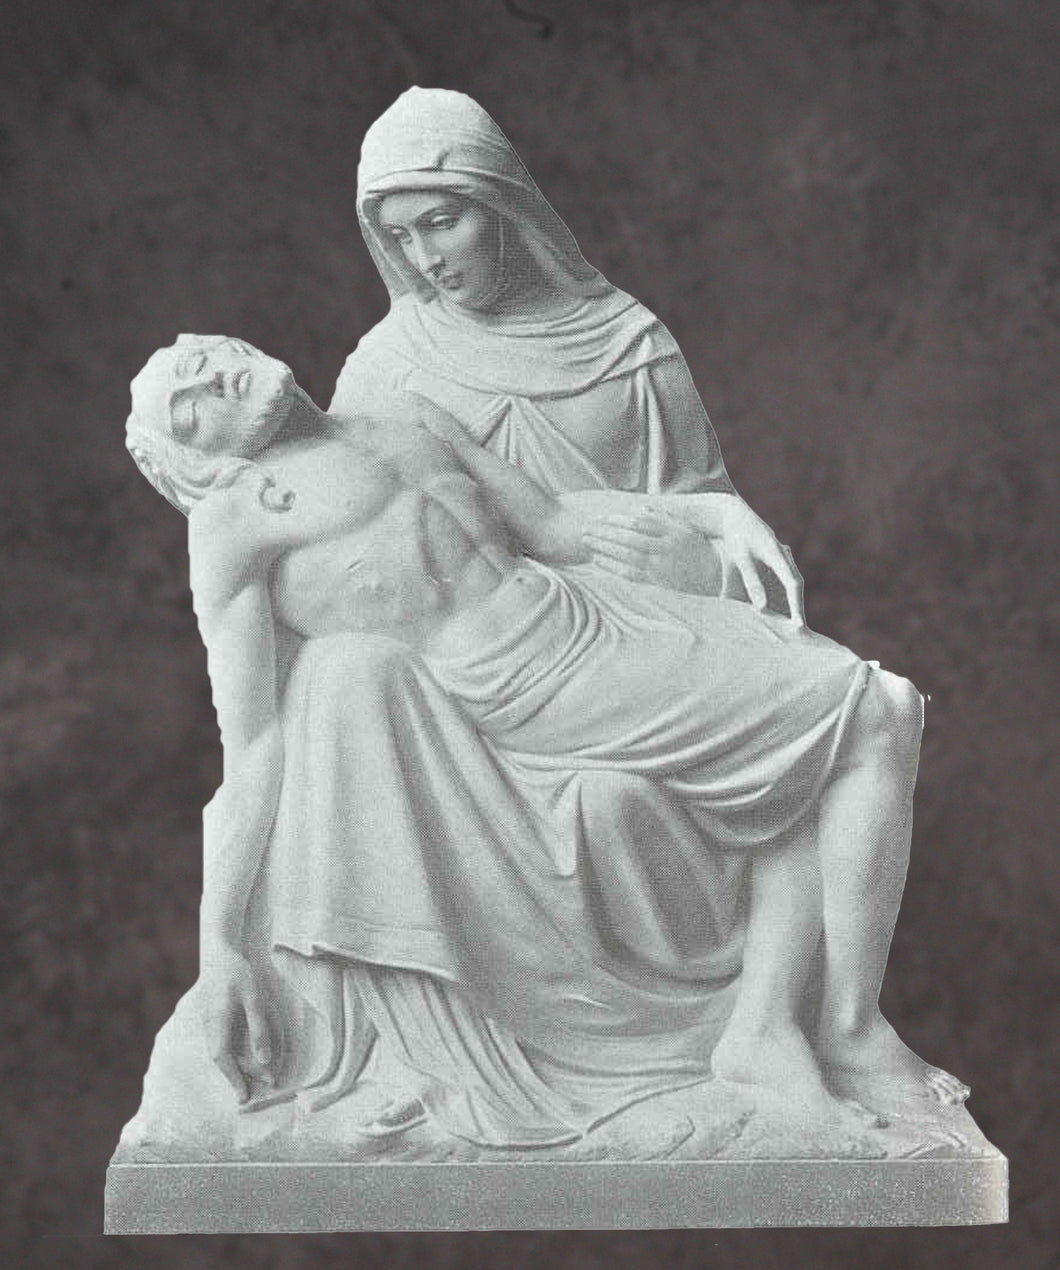 Life Size Pieta Statue by De De Prato in Solid Marble - 72”H